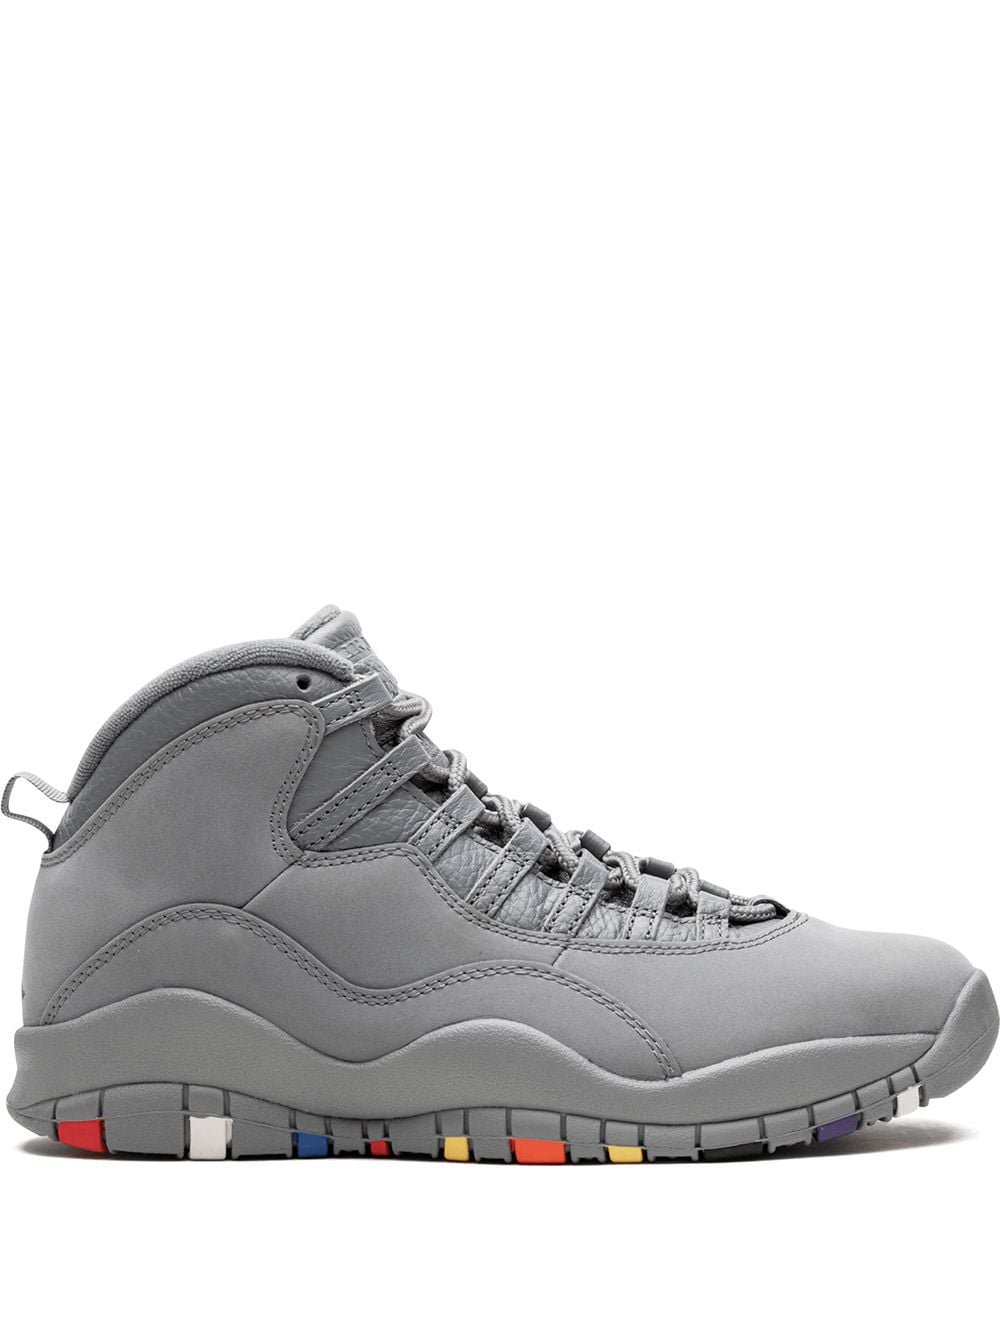 Jordan air jordan 10 retro sneakers - Grey